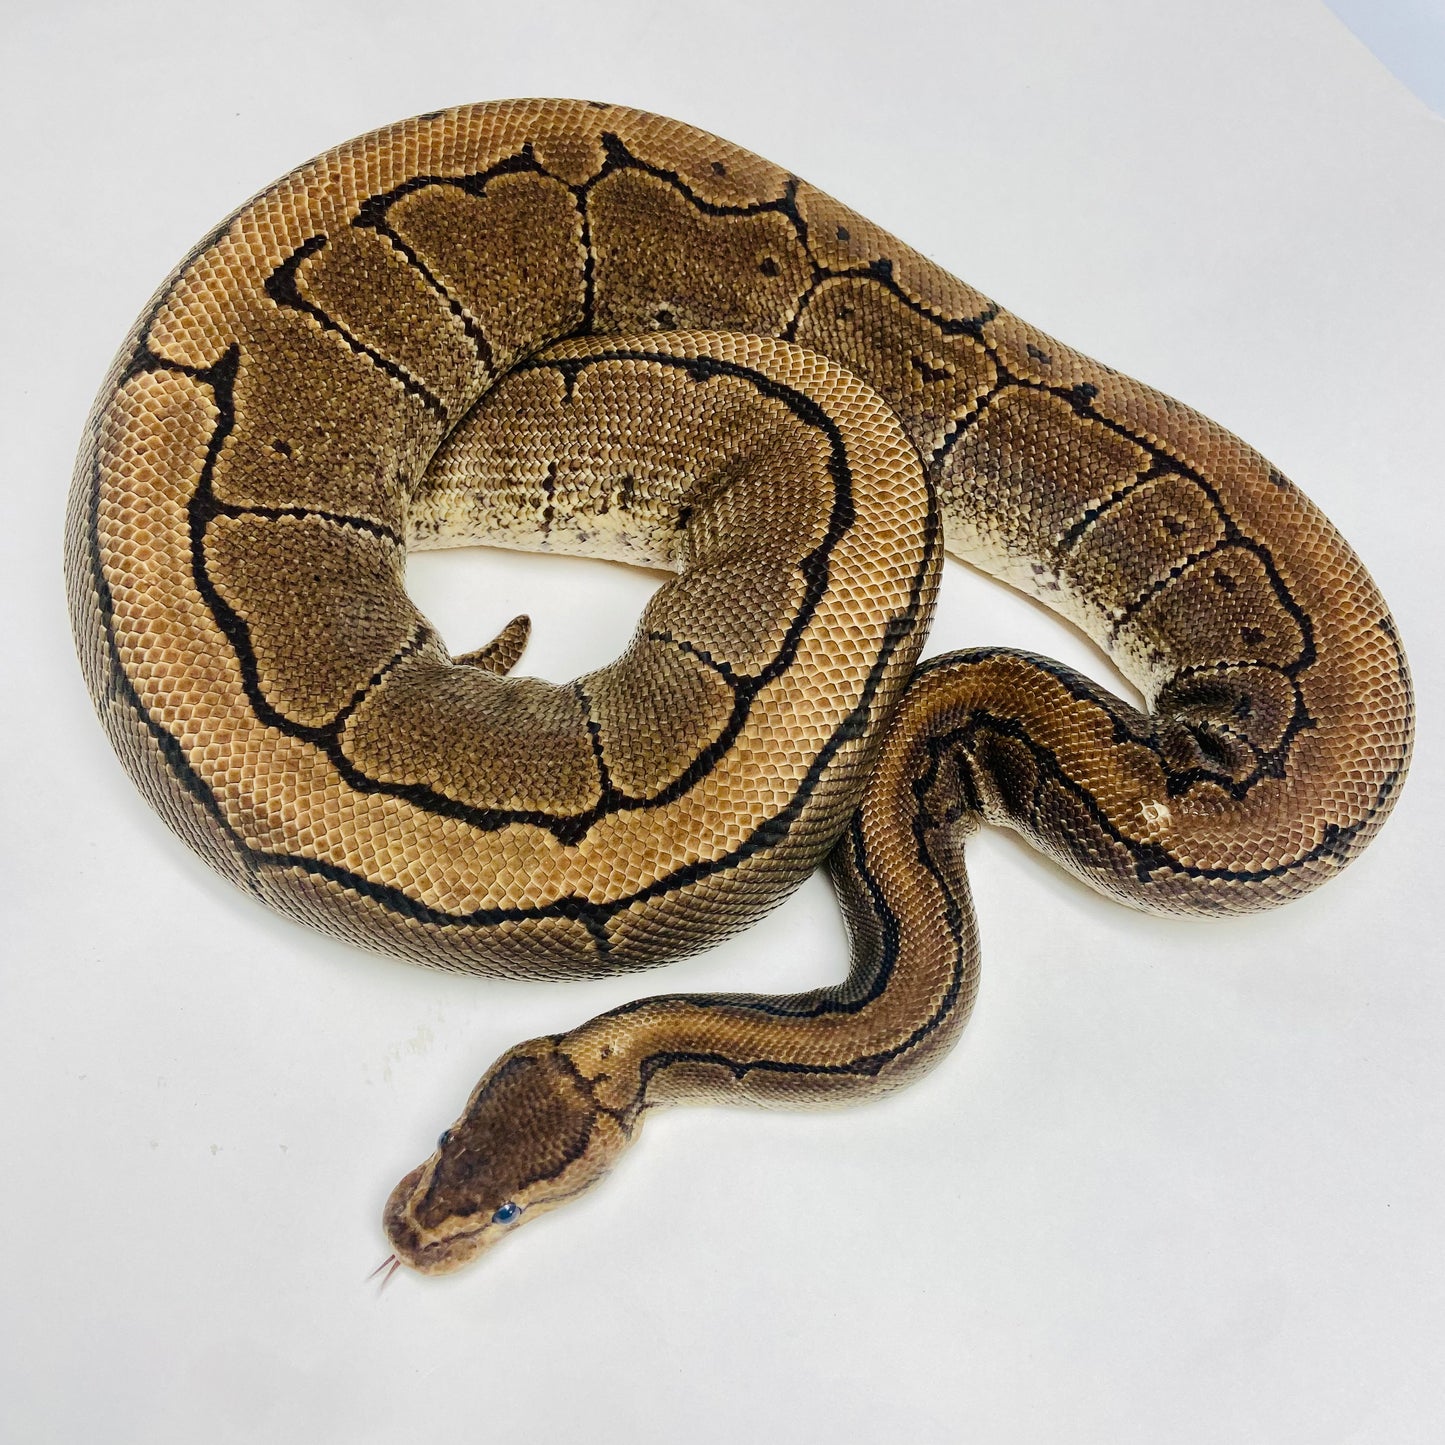 Adult Pinstripe Het Caramel Ball Python- Female